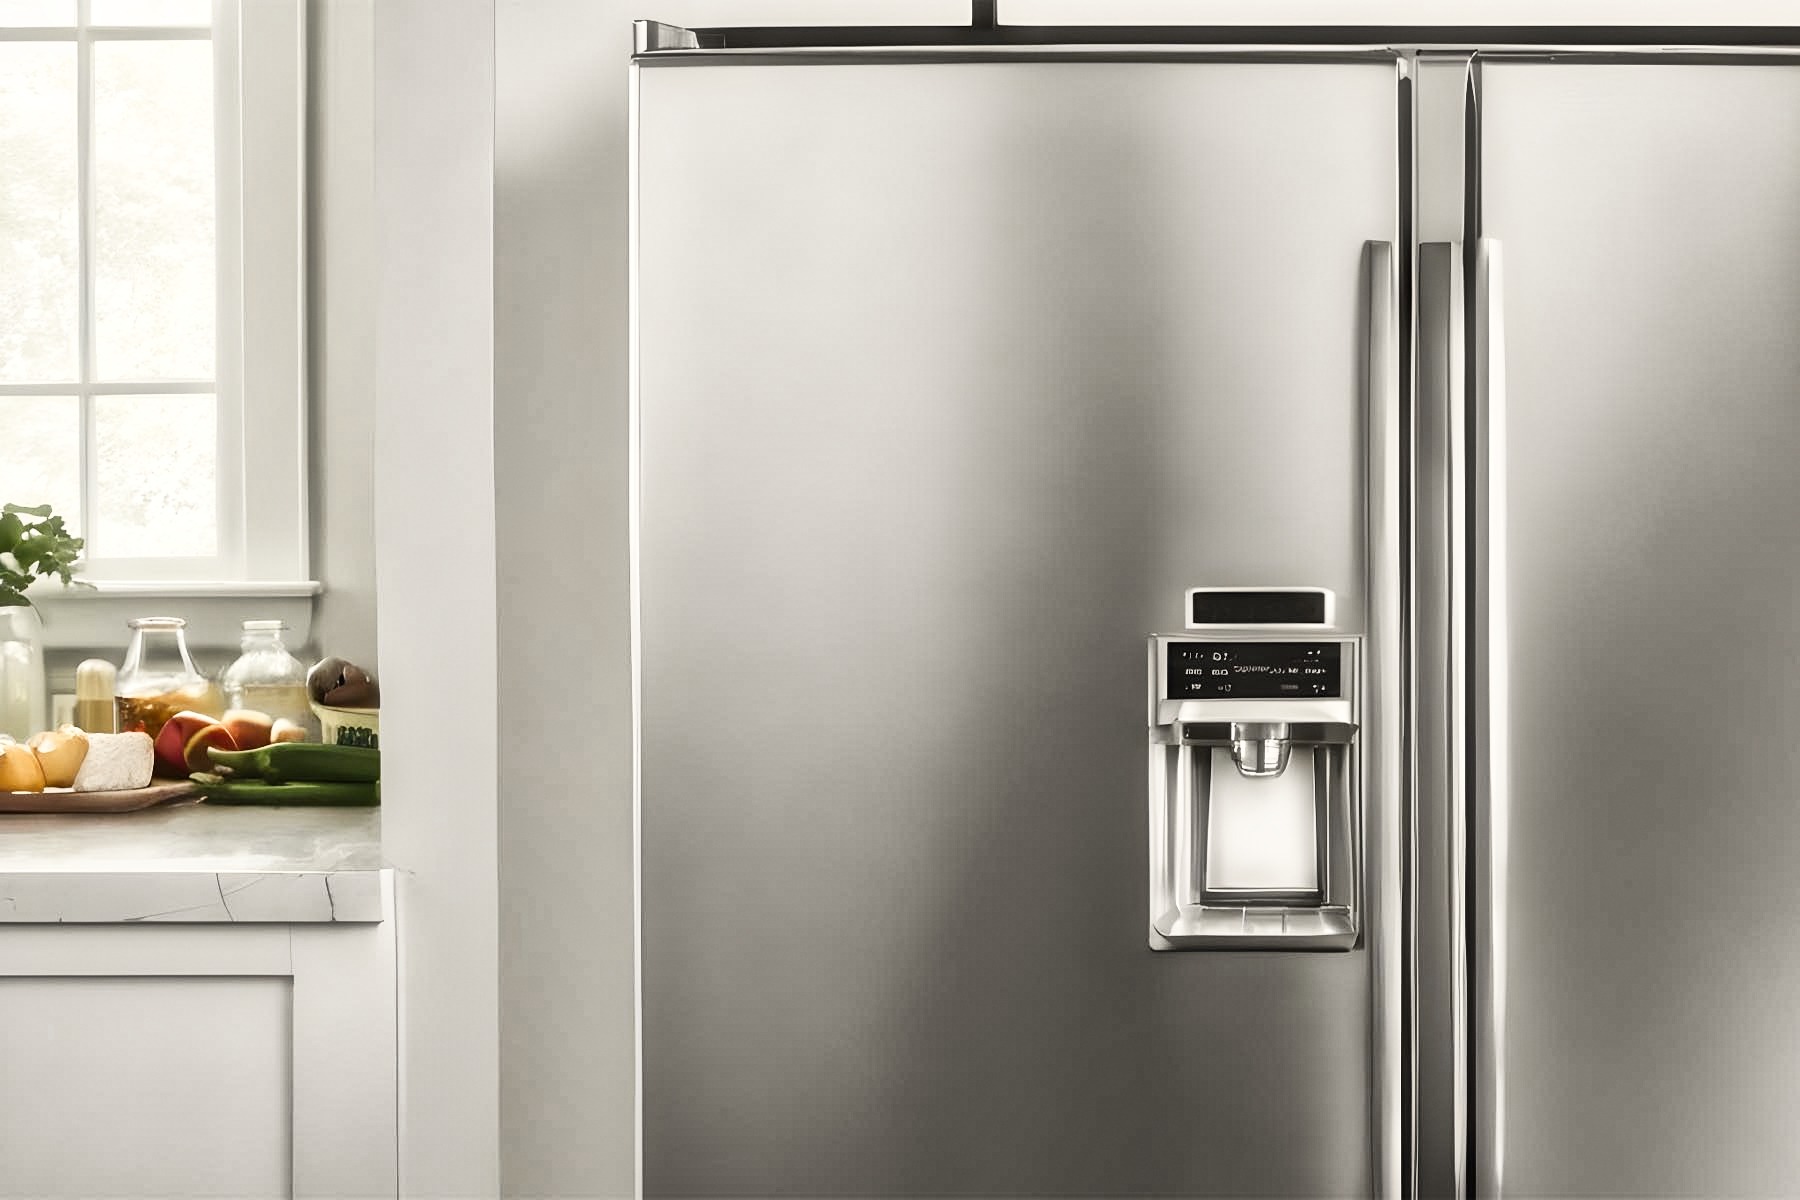 Leander's Authorized KitchenAid Refrigerator Repair Services